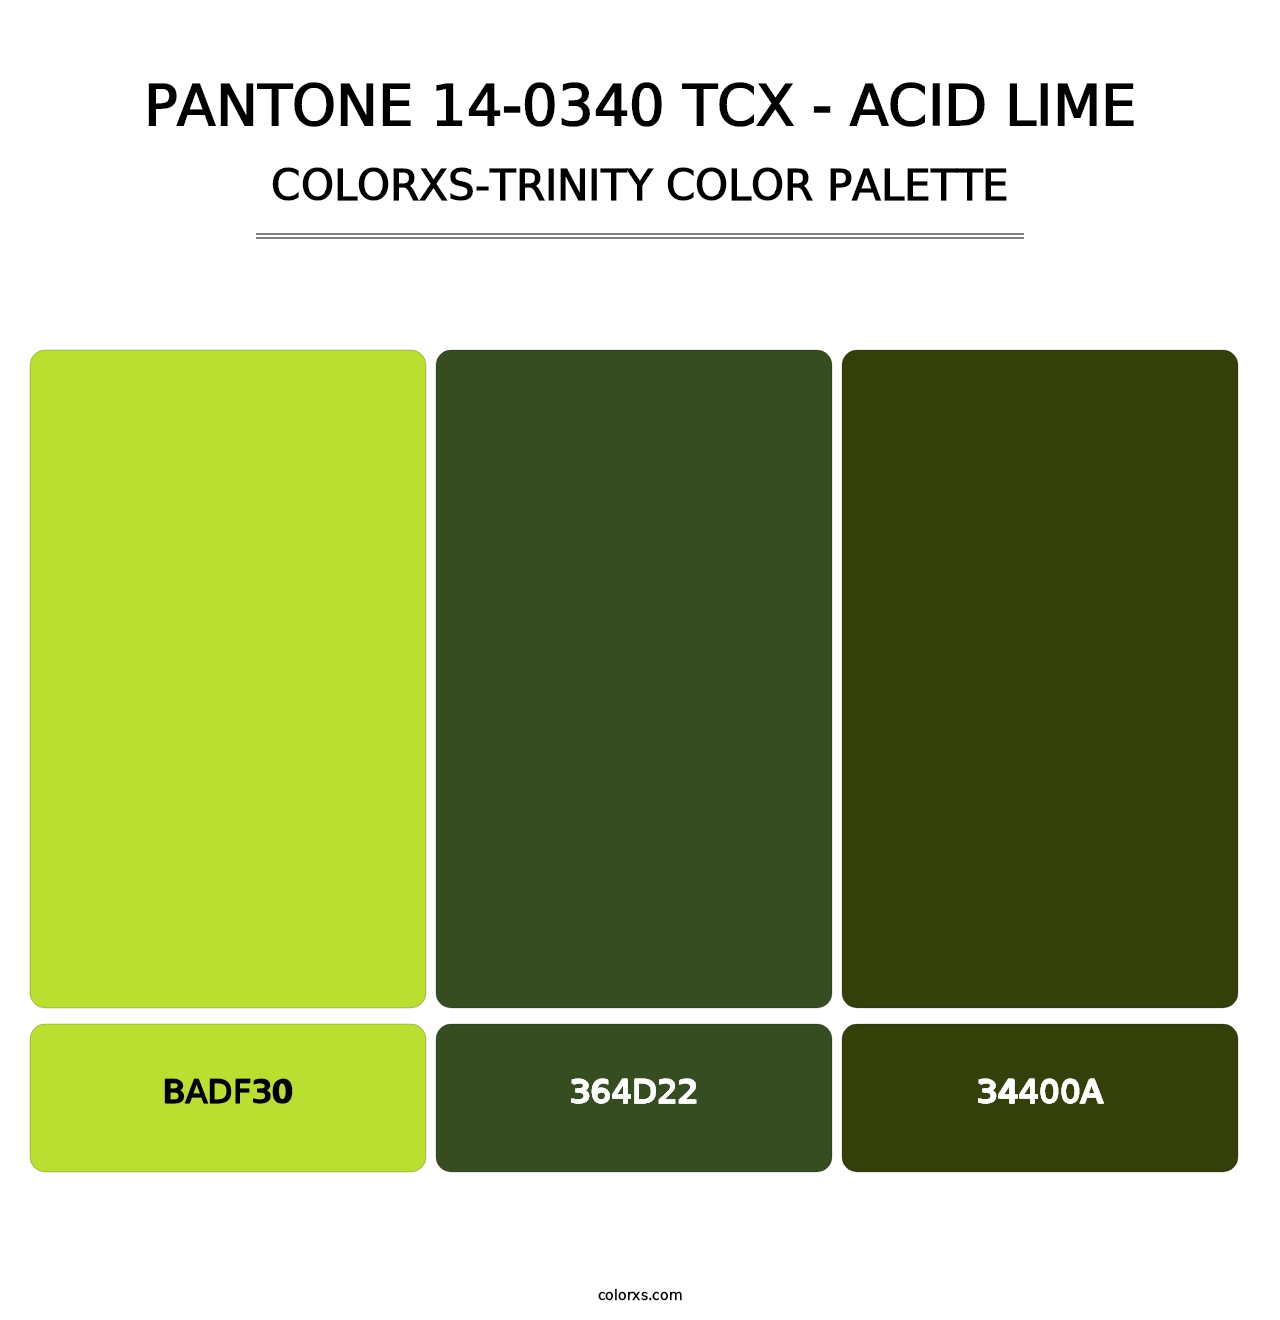 PANTONE 14-0340 TCX - Acid Lime - Colorxs Trinity Palette